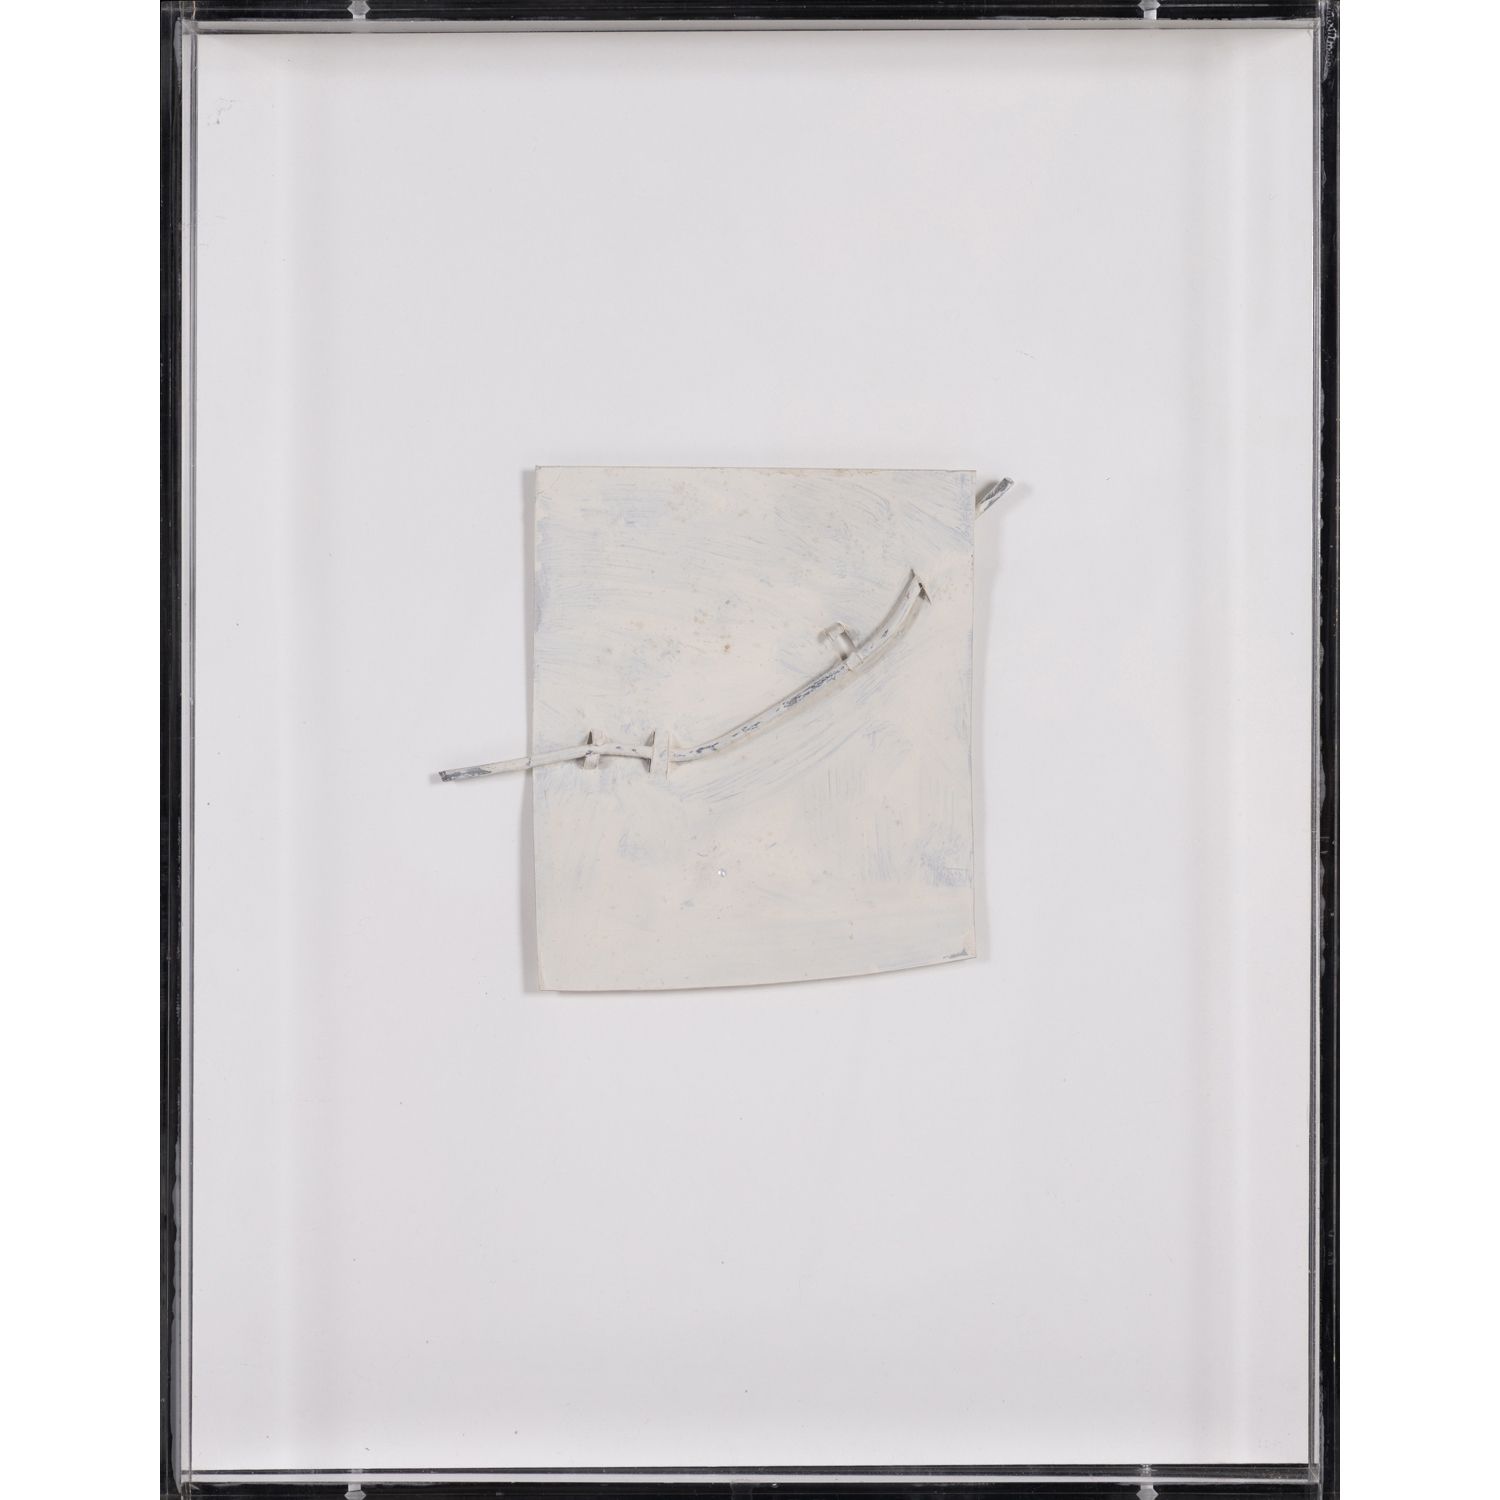 Null 迪迪埃-马塞尔（生于1961年

无题

在有机玻璃盒中粘在纸板上的喷漆切割金属。

39 x 31 x 5厘米

出处： - 现任主人直接从艺术家那&hellip;